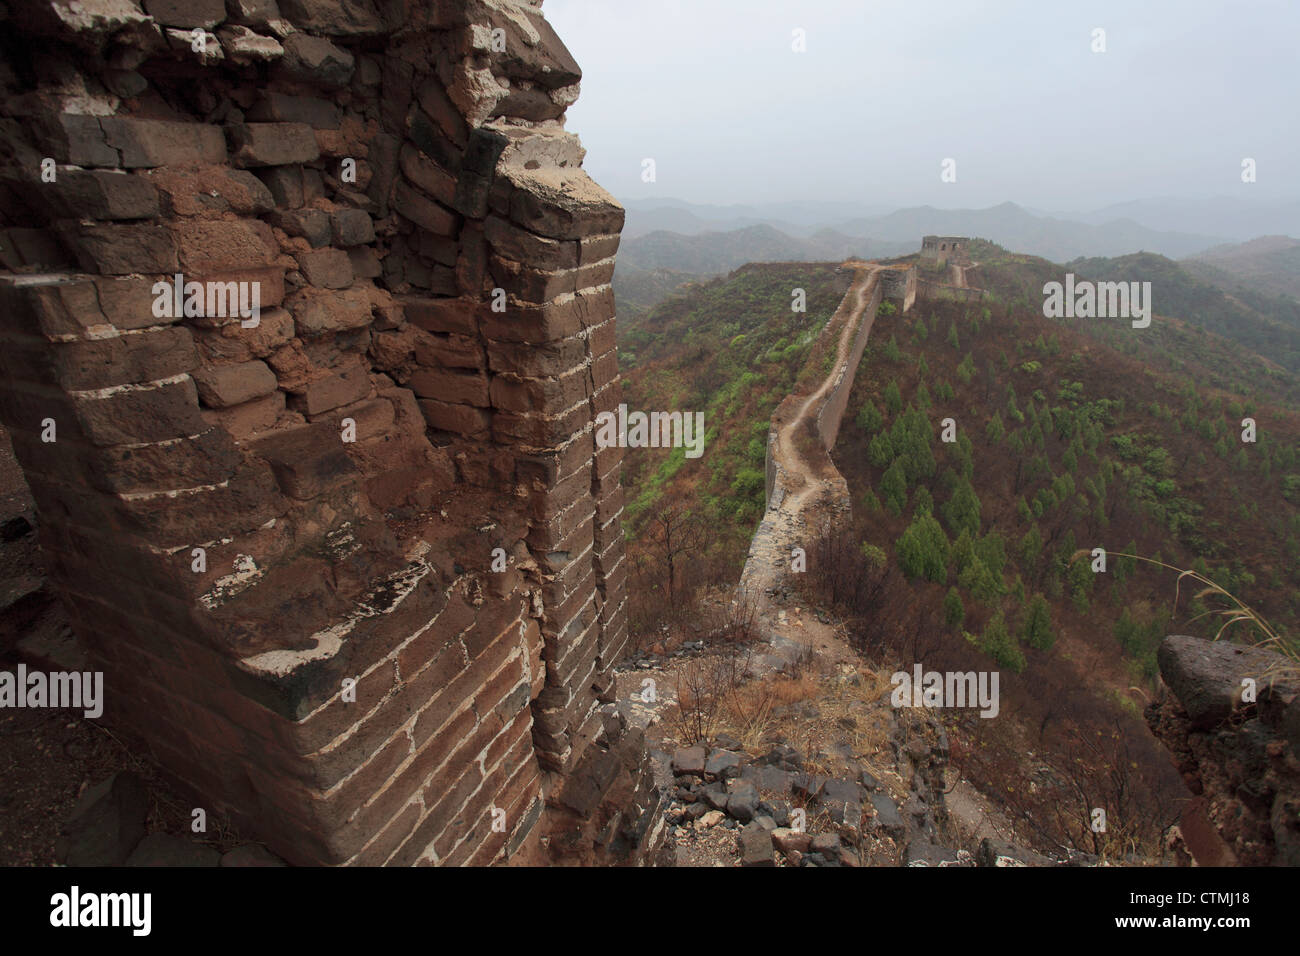 The Great Wall of China near Gubeikou village, Beijing Provence, China, Asia. Stock Photo